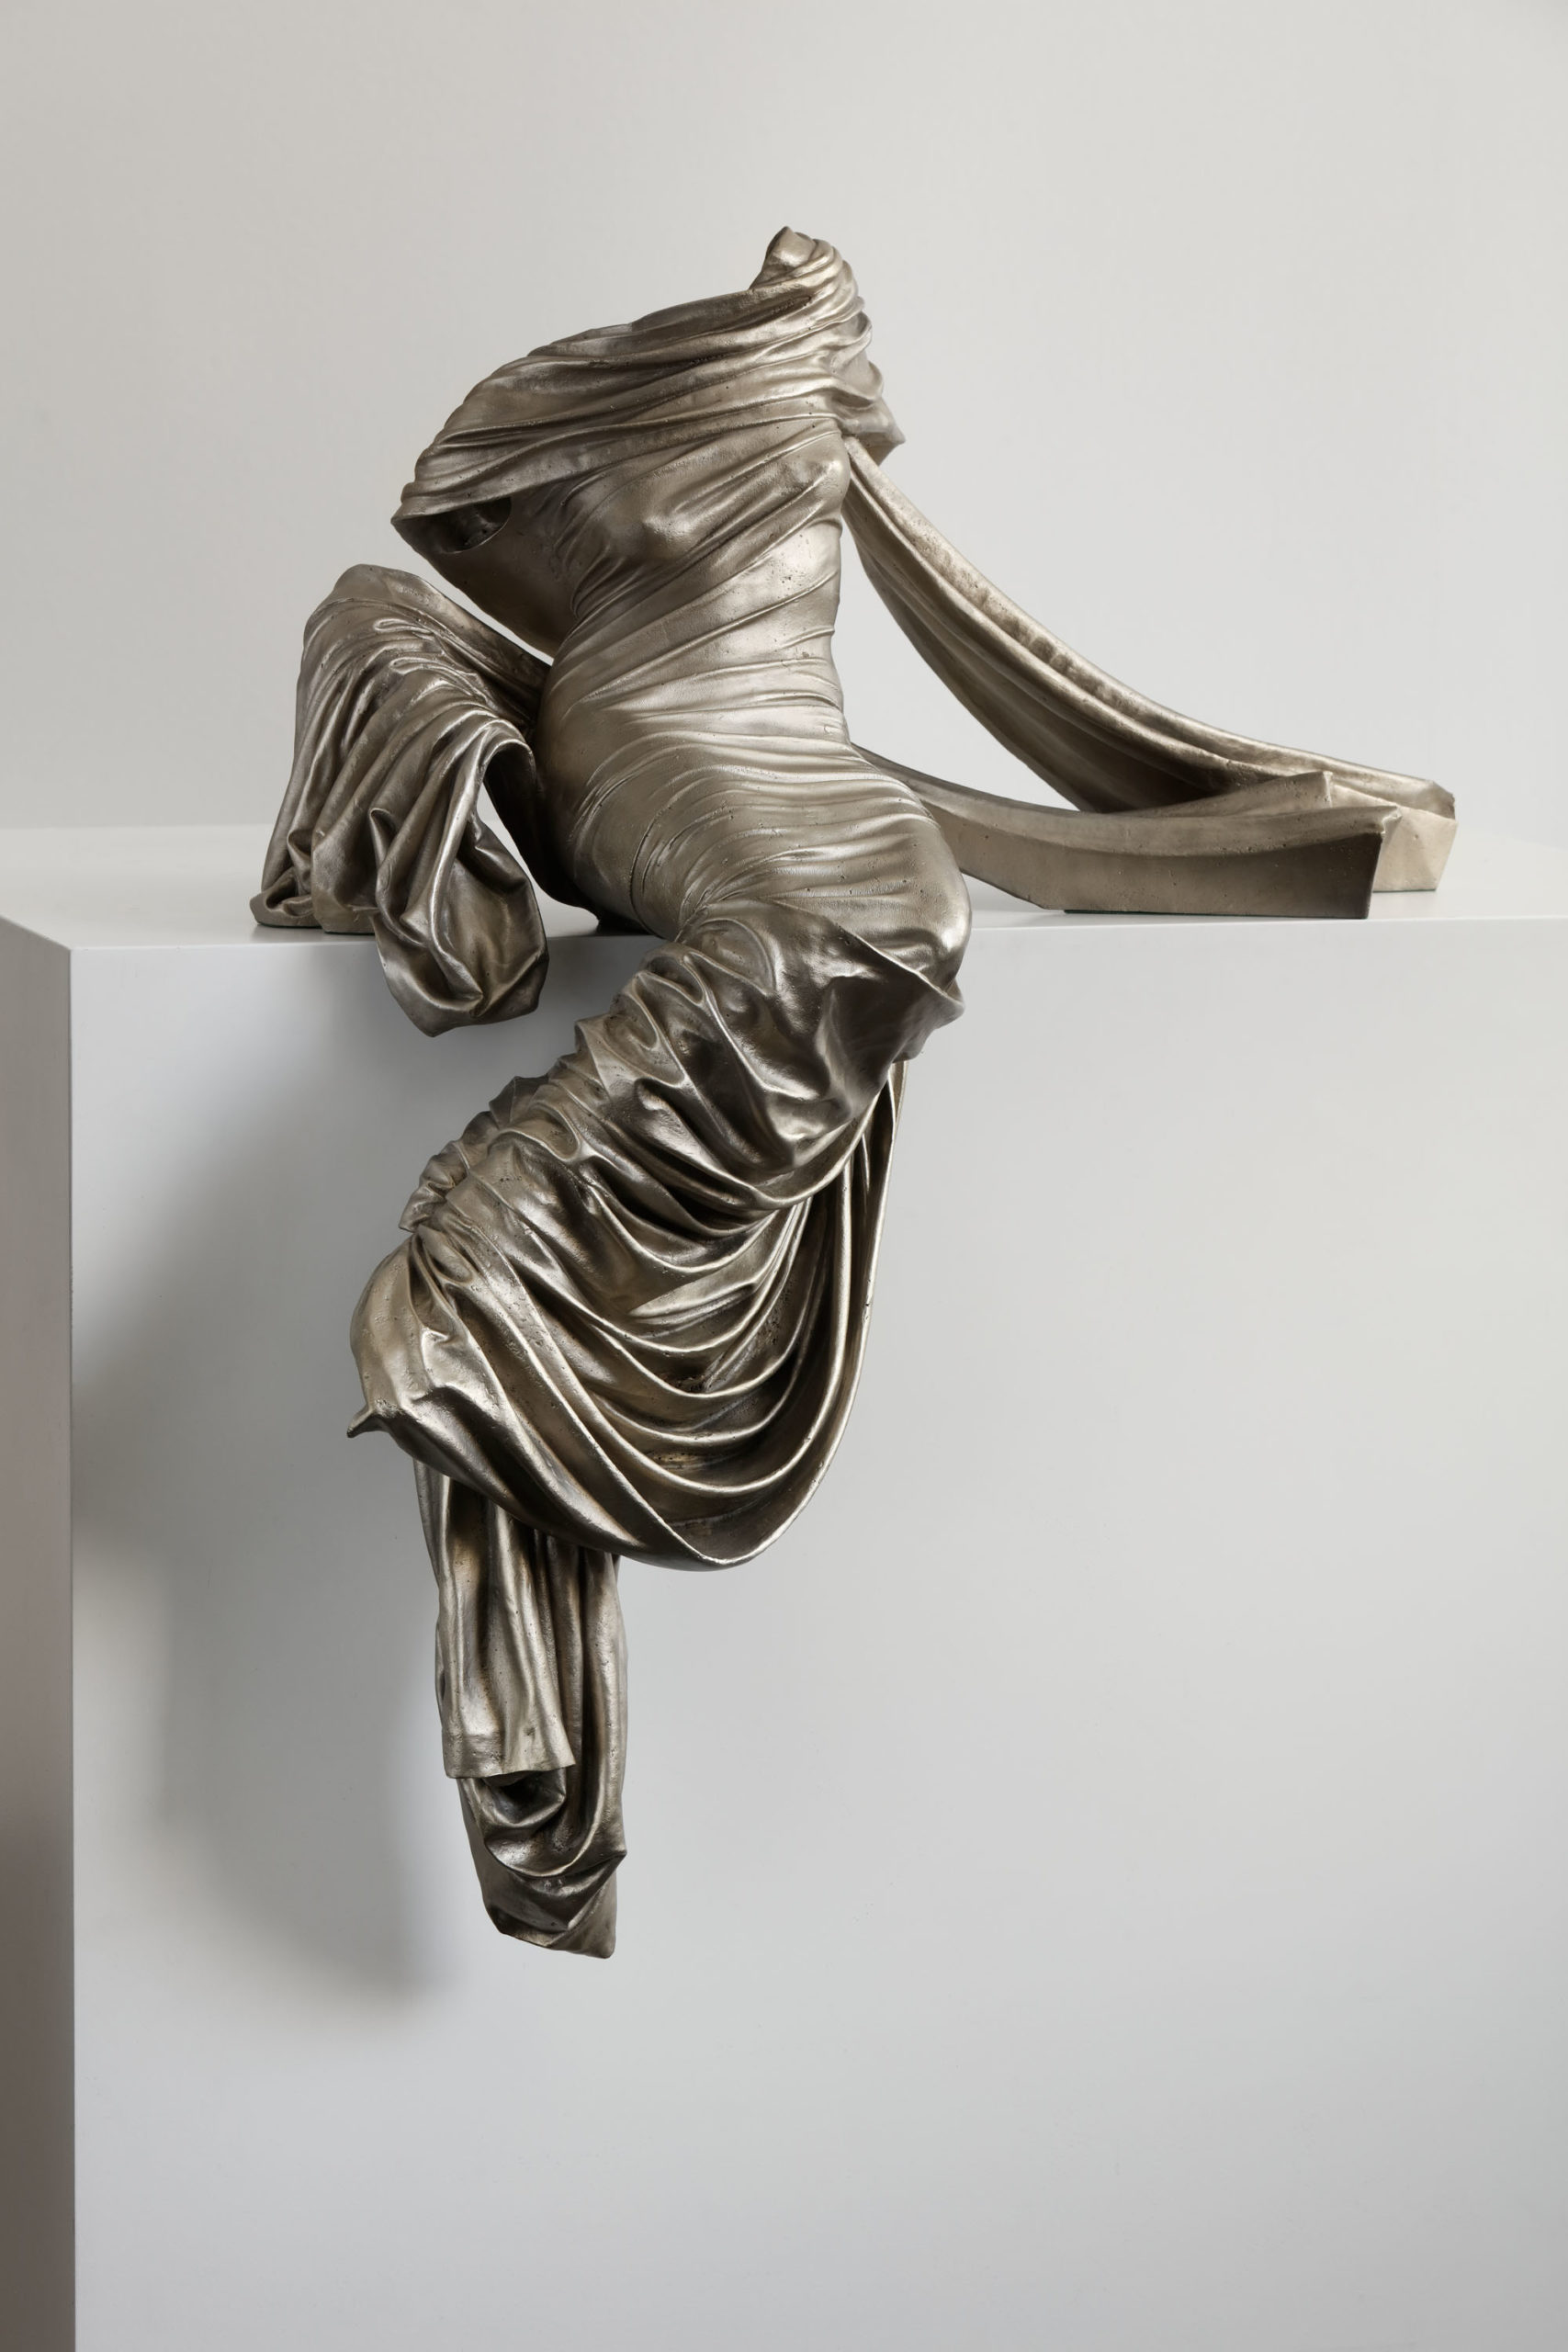 
		                					Karen LaMonte		                																	
																											<i>Reclining Etude 13 2/5,</i>  
																																								2020, 
																																								white bronze, 
																																								29 x 20 x 15 inches 
																								
		                				